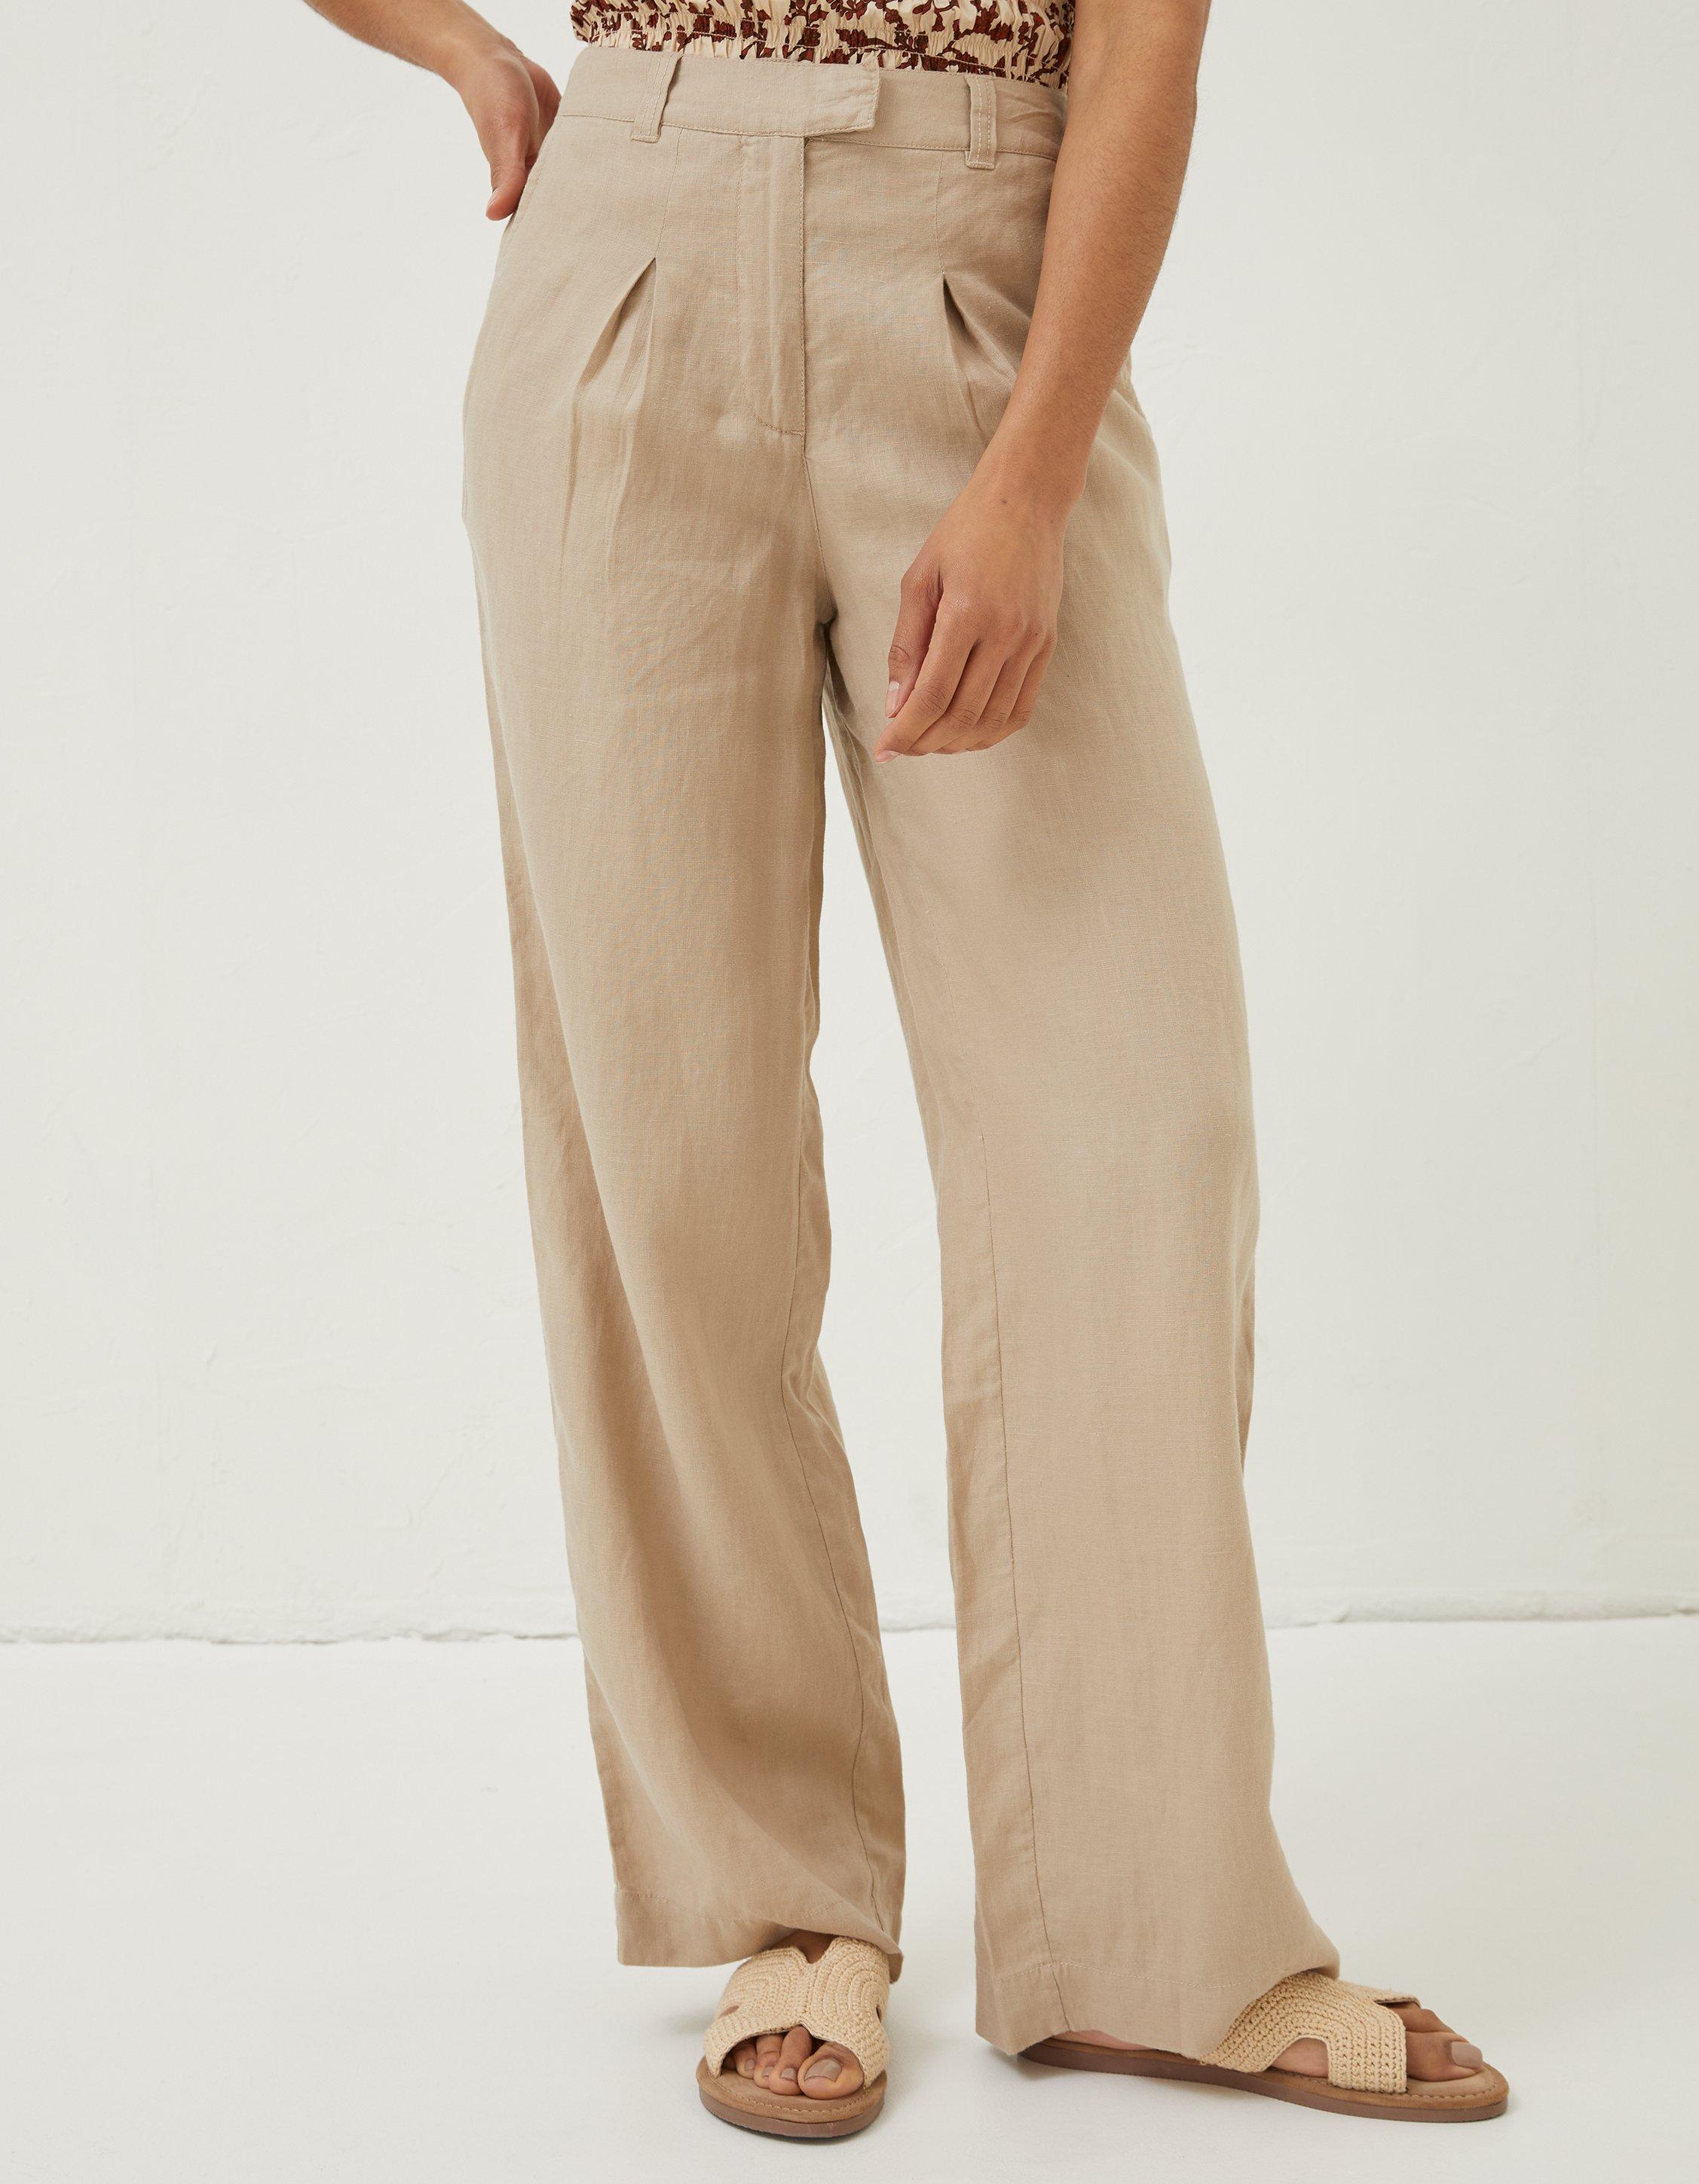 Natural Linen Pants, Summer Pants, Womens Pants, Beige Pants